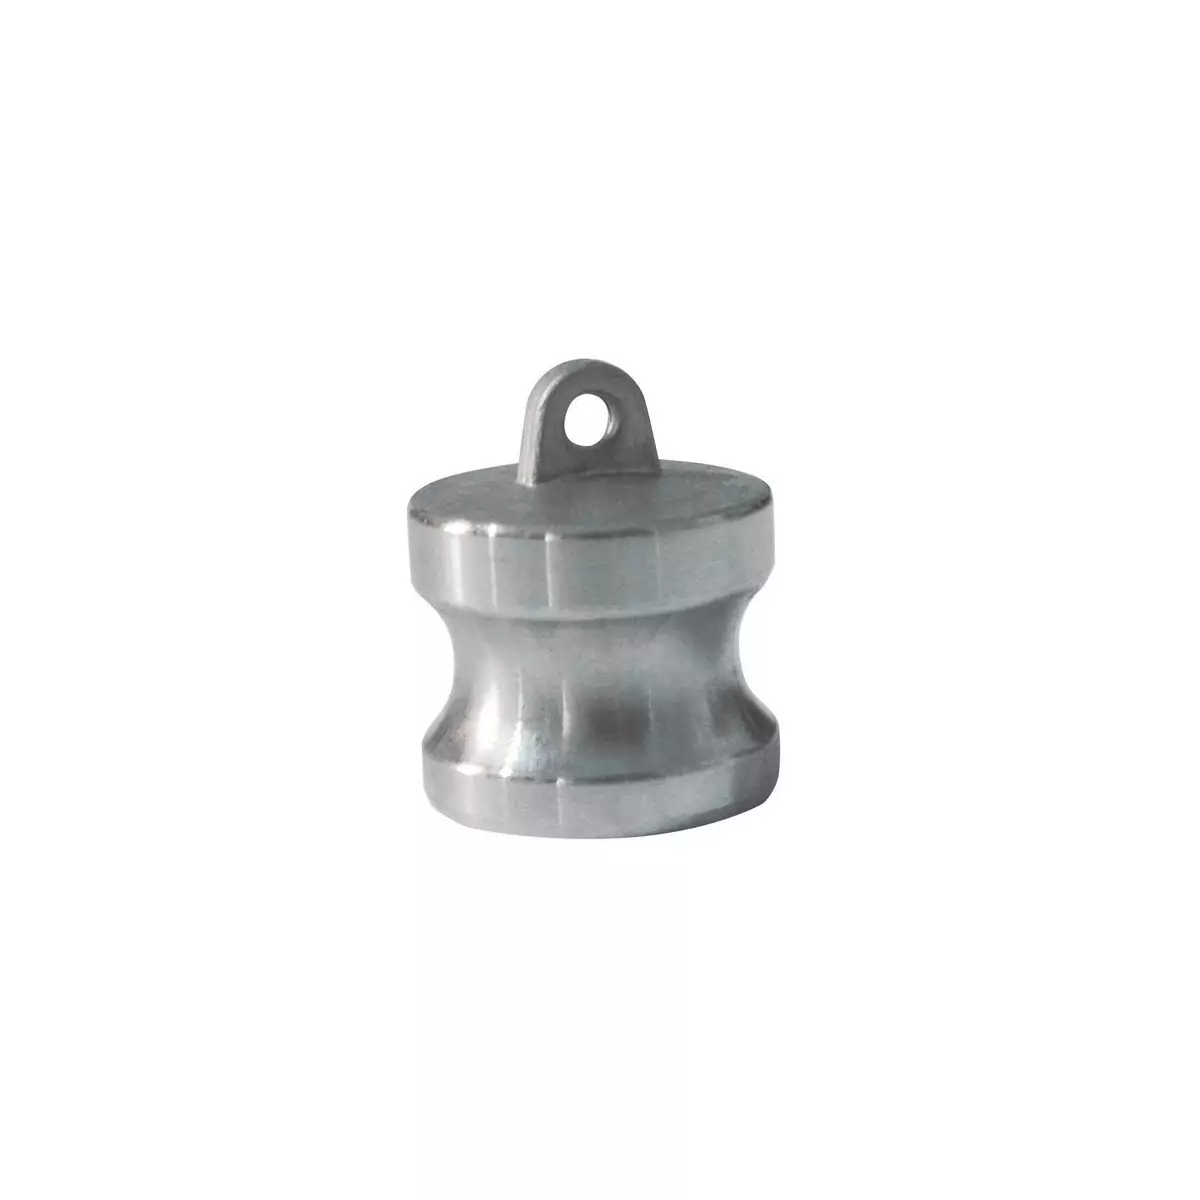 Stainless steel camlock plug - Type DP